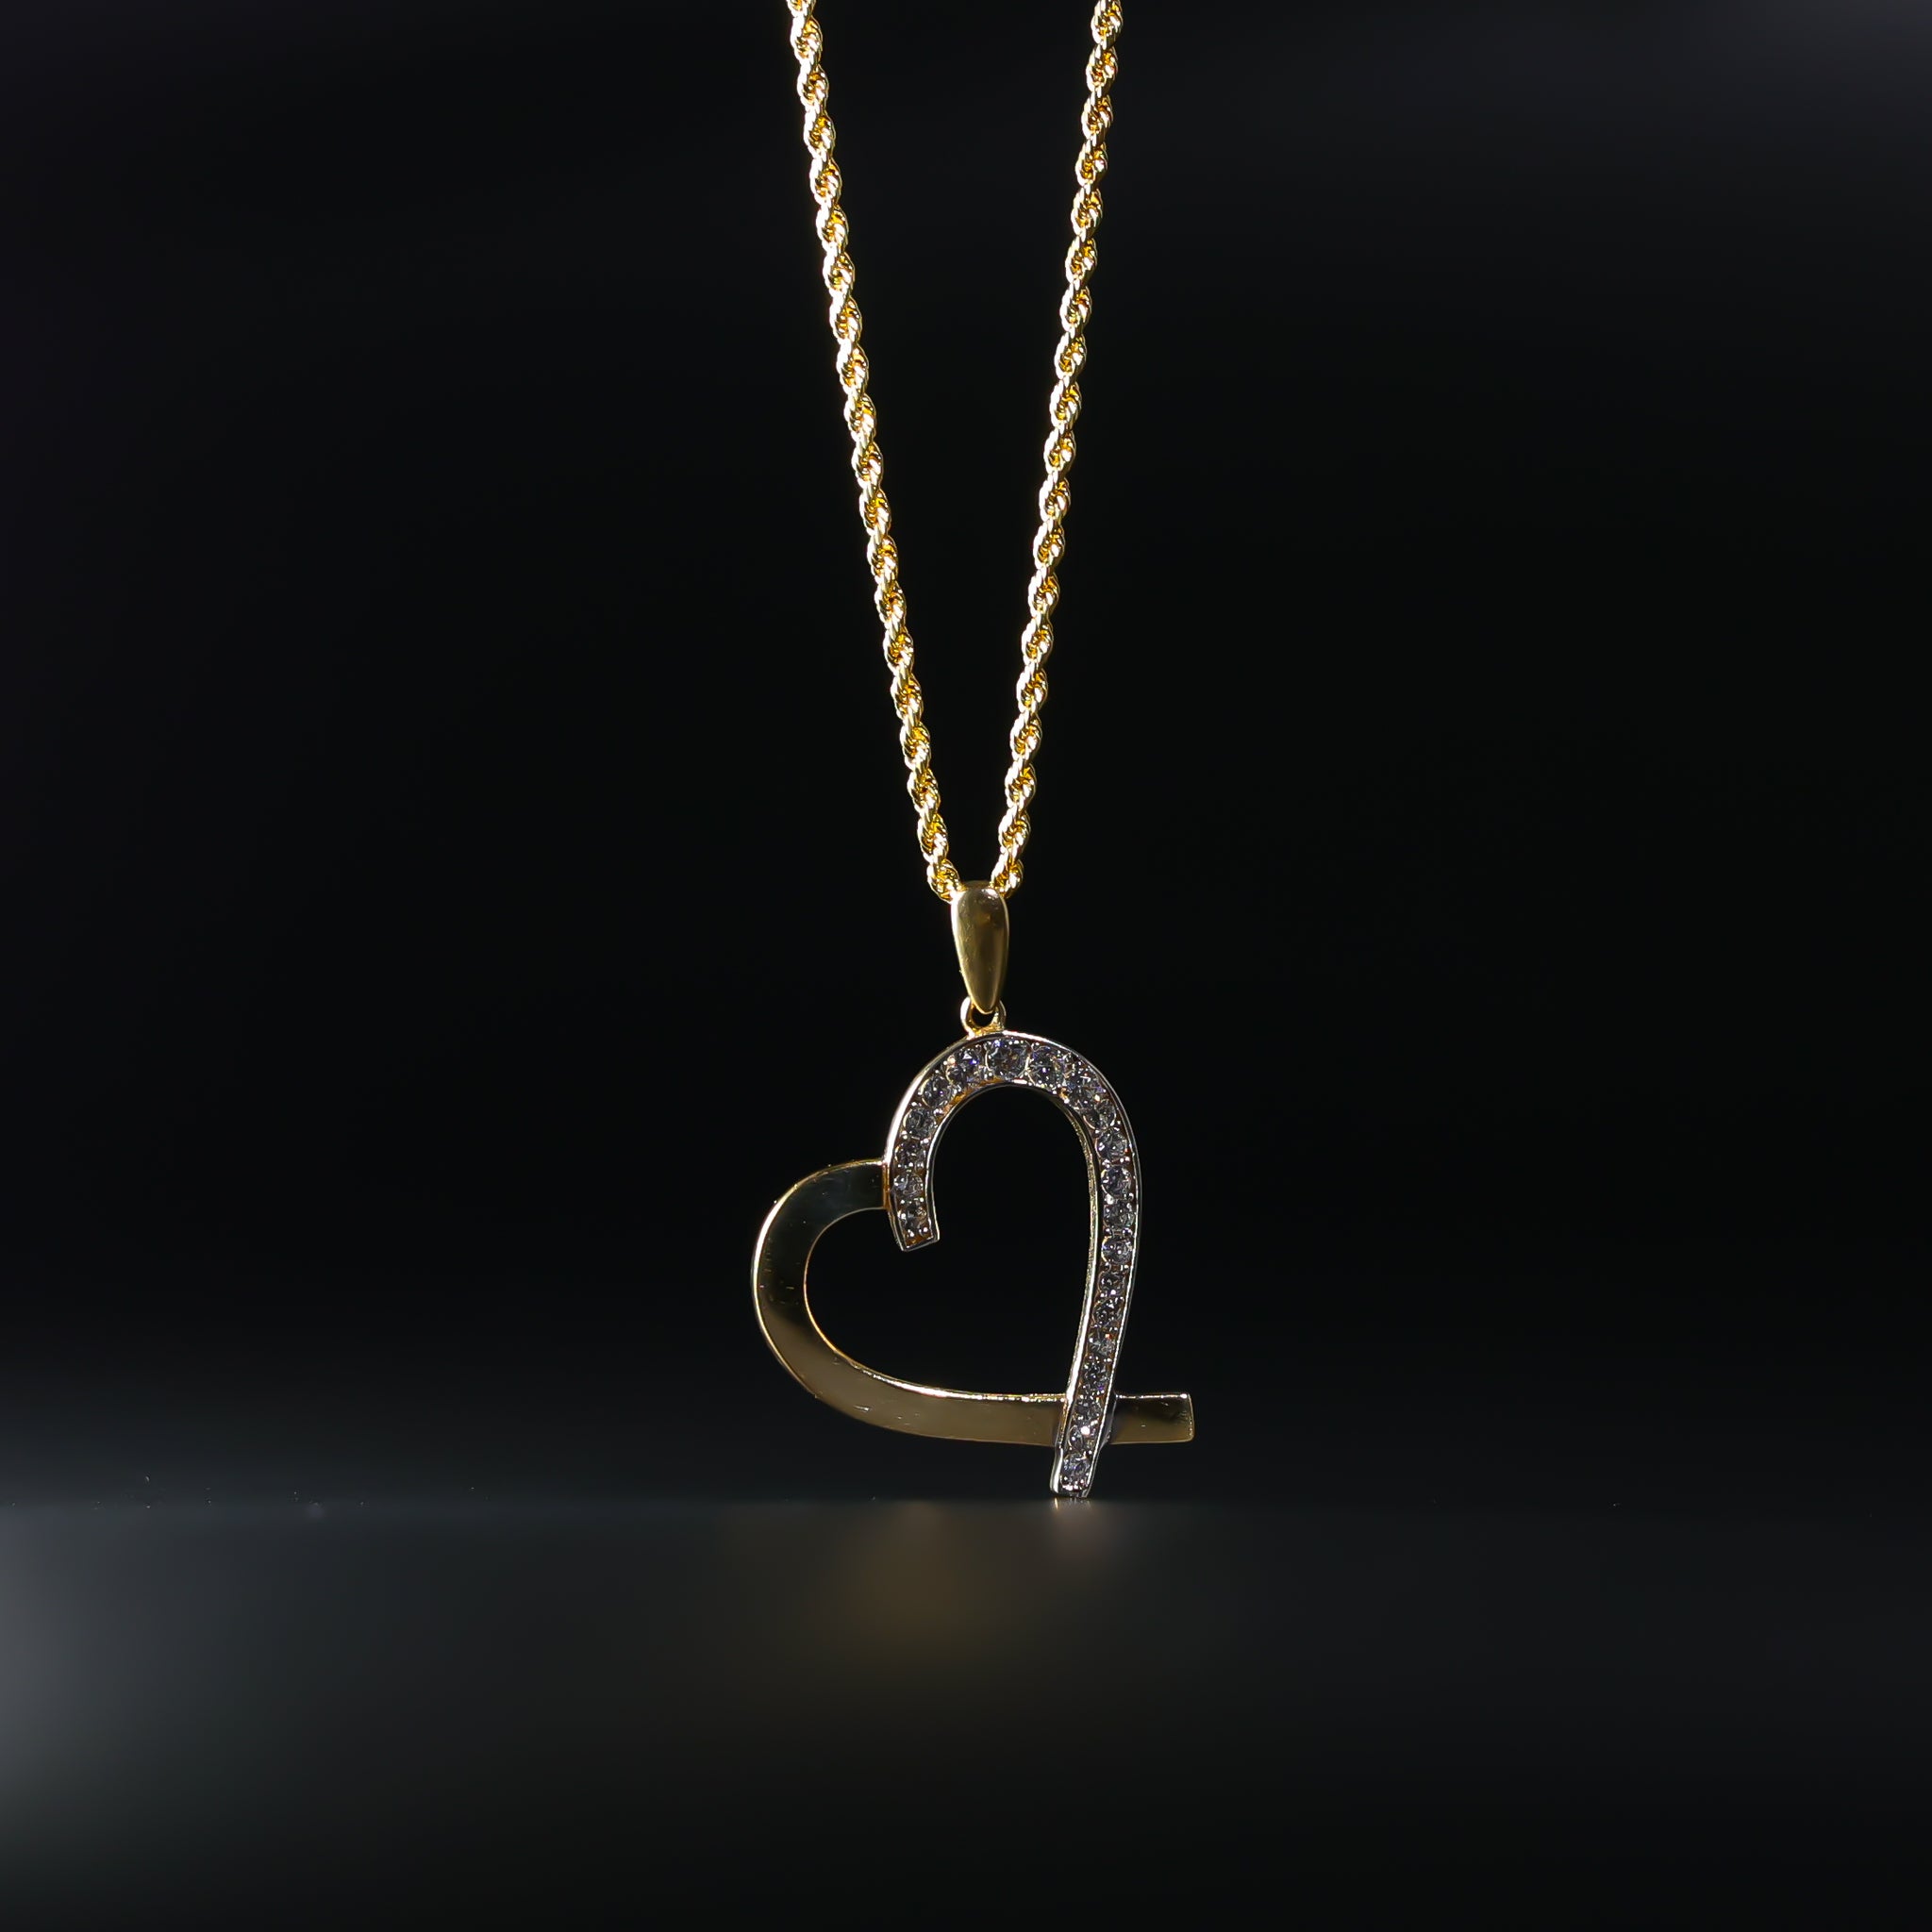 Gold CZ Stones Heart Pendant Model-1770 - Charlie & Co. Jewelry